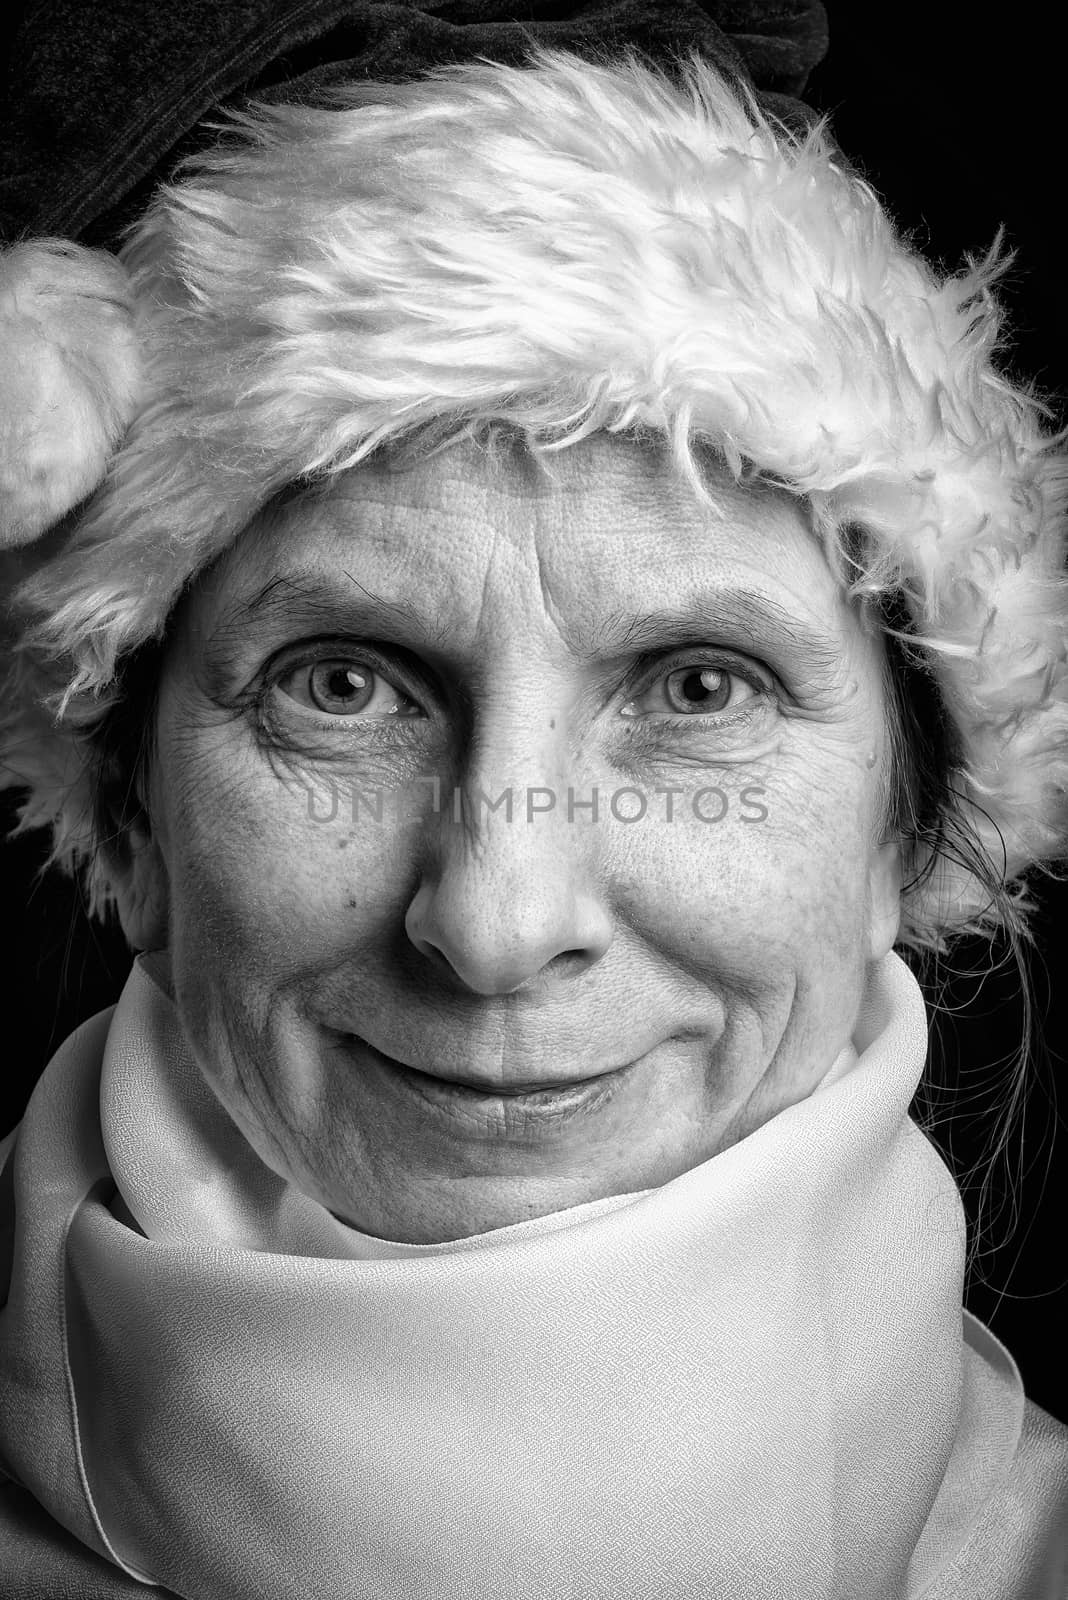 Adult woman disguised in Santa Claus by MaxalTamor